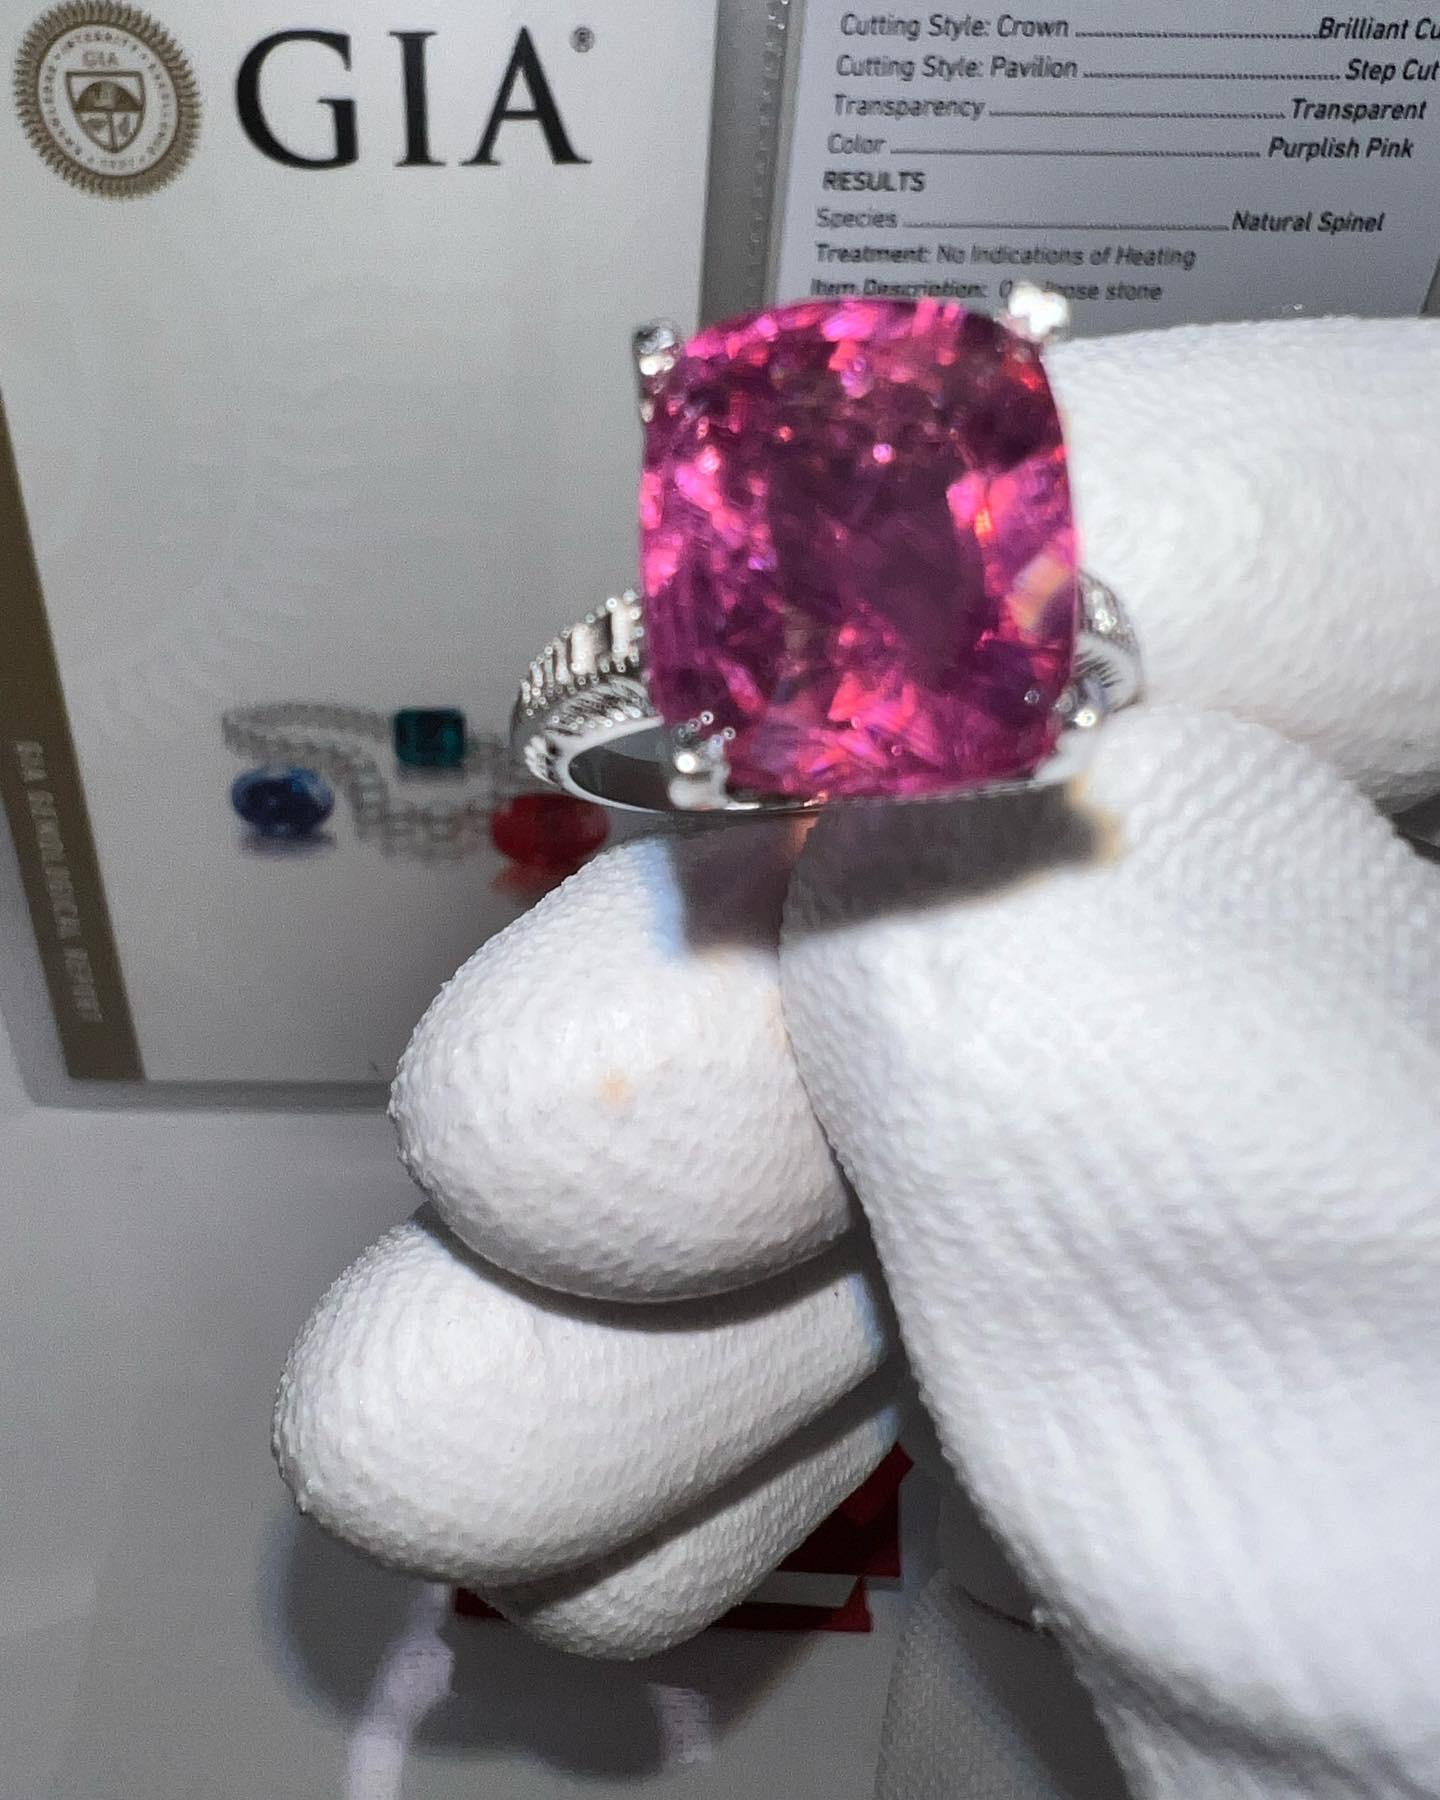 Rare 10.4 Carat Purplish Pink Spinel Solitaire Ring, GIA Certified 2